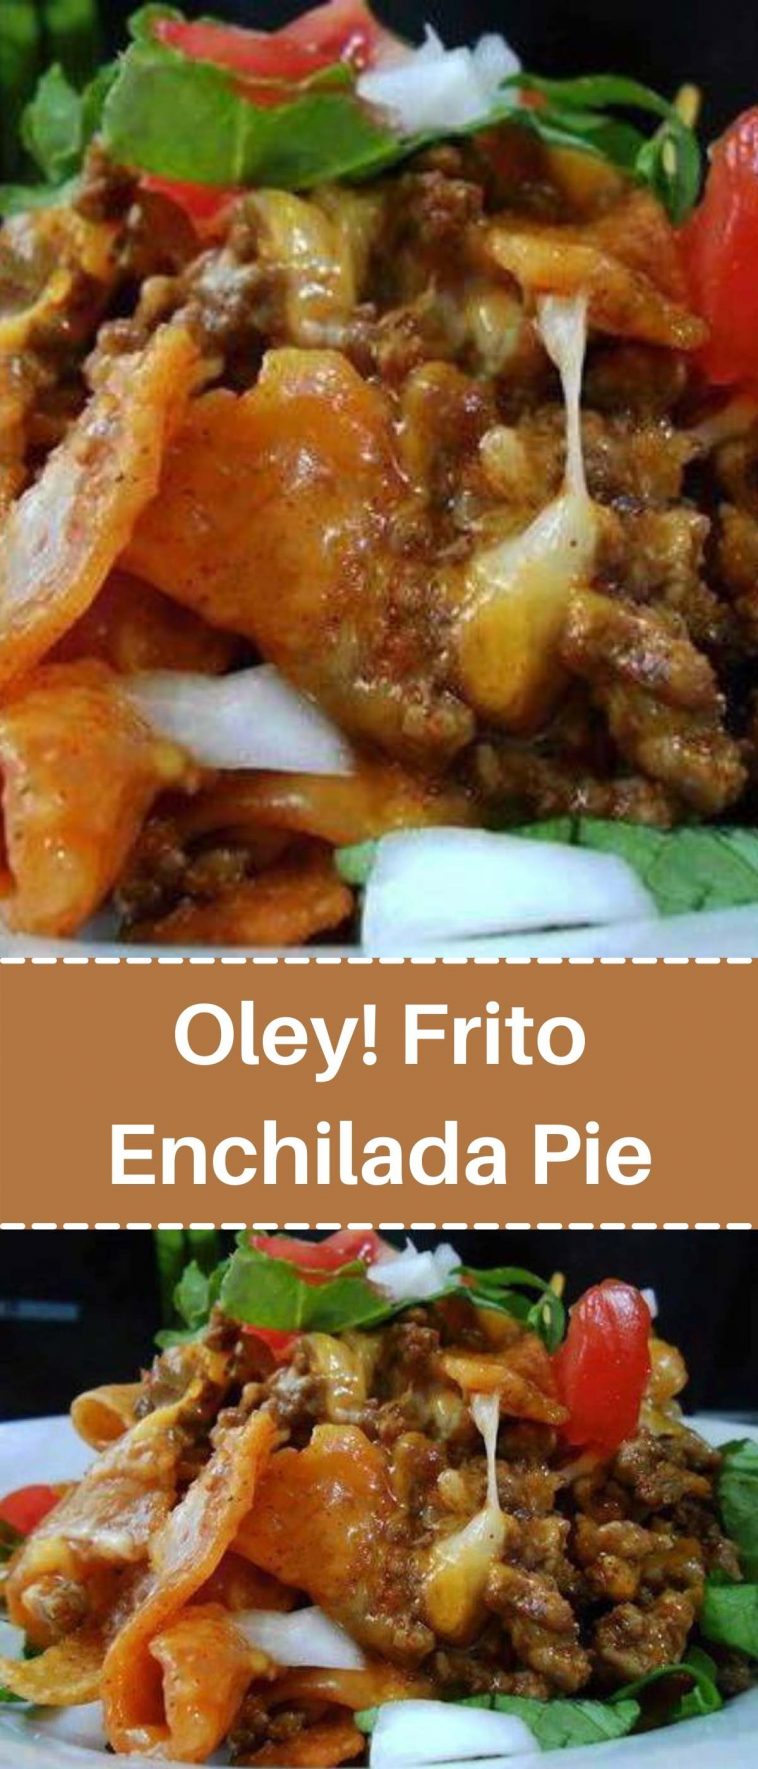 Oley! Frito Enchilada Pie